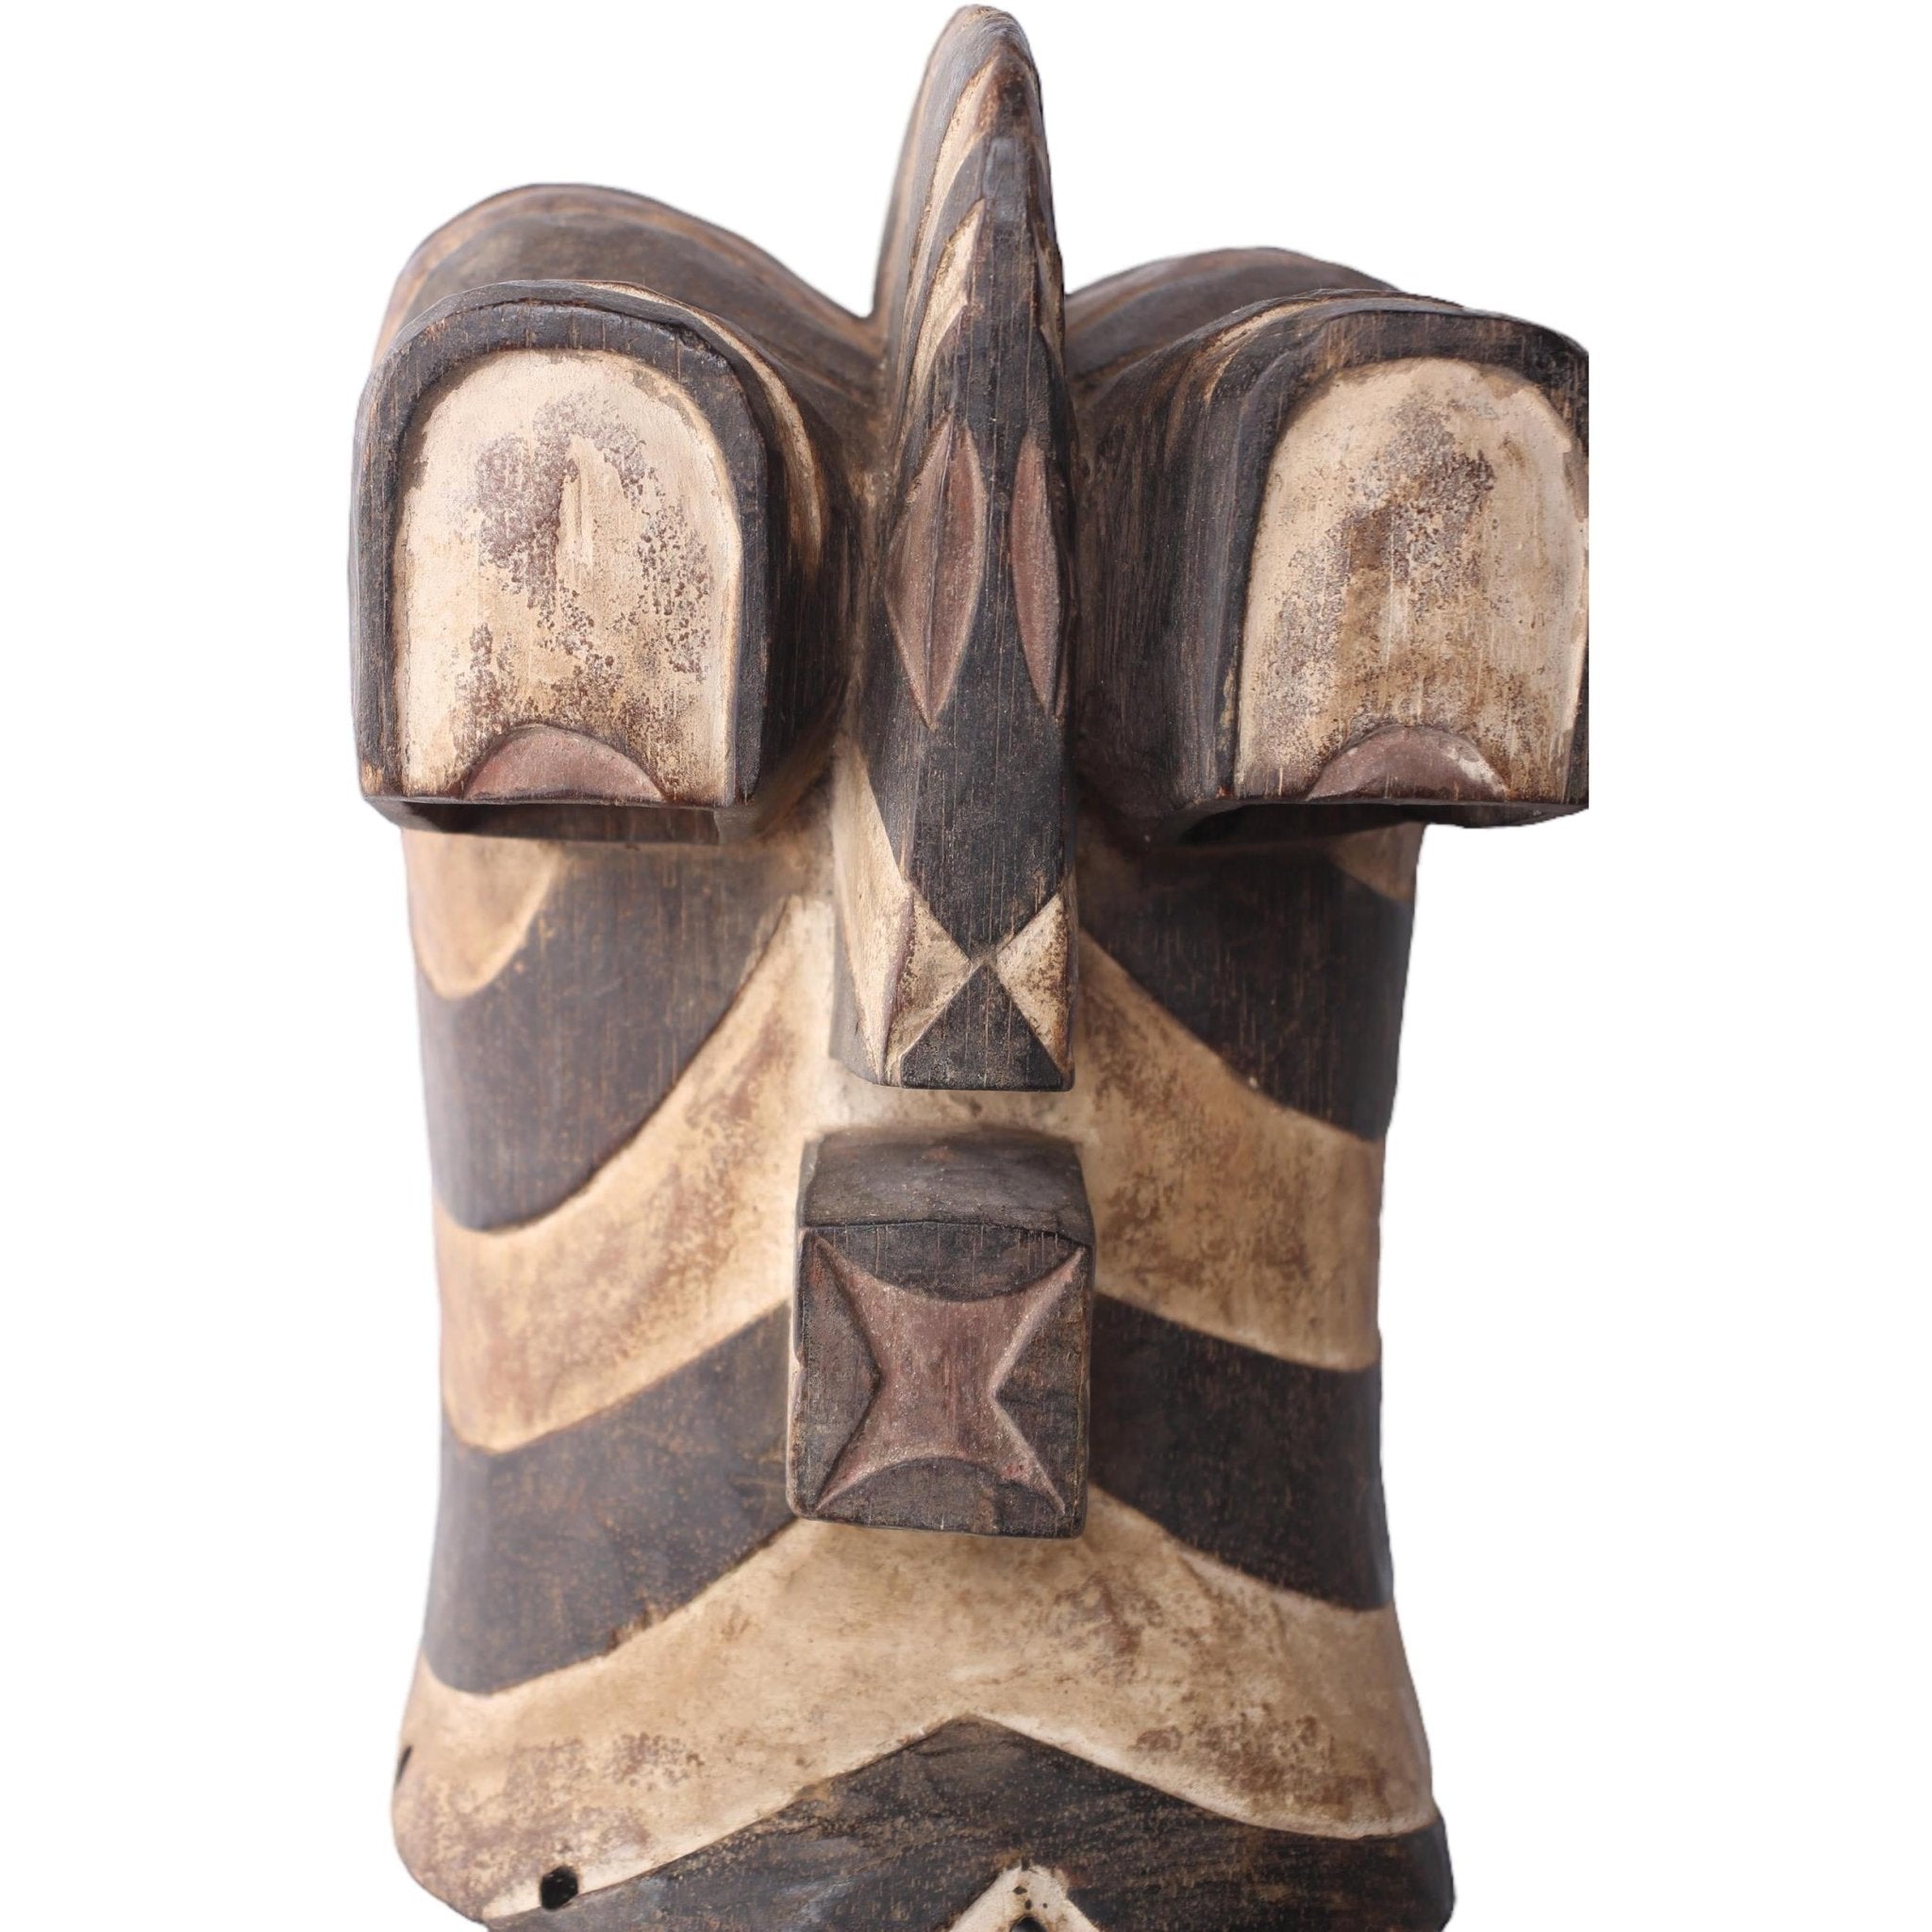 Basonge/Songye Tribe Mask ~11.8" Tall - African Angel Art - Mask